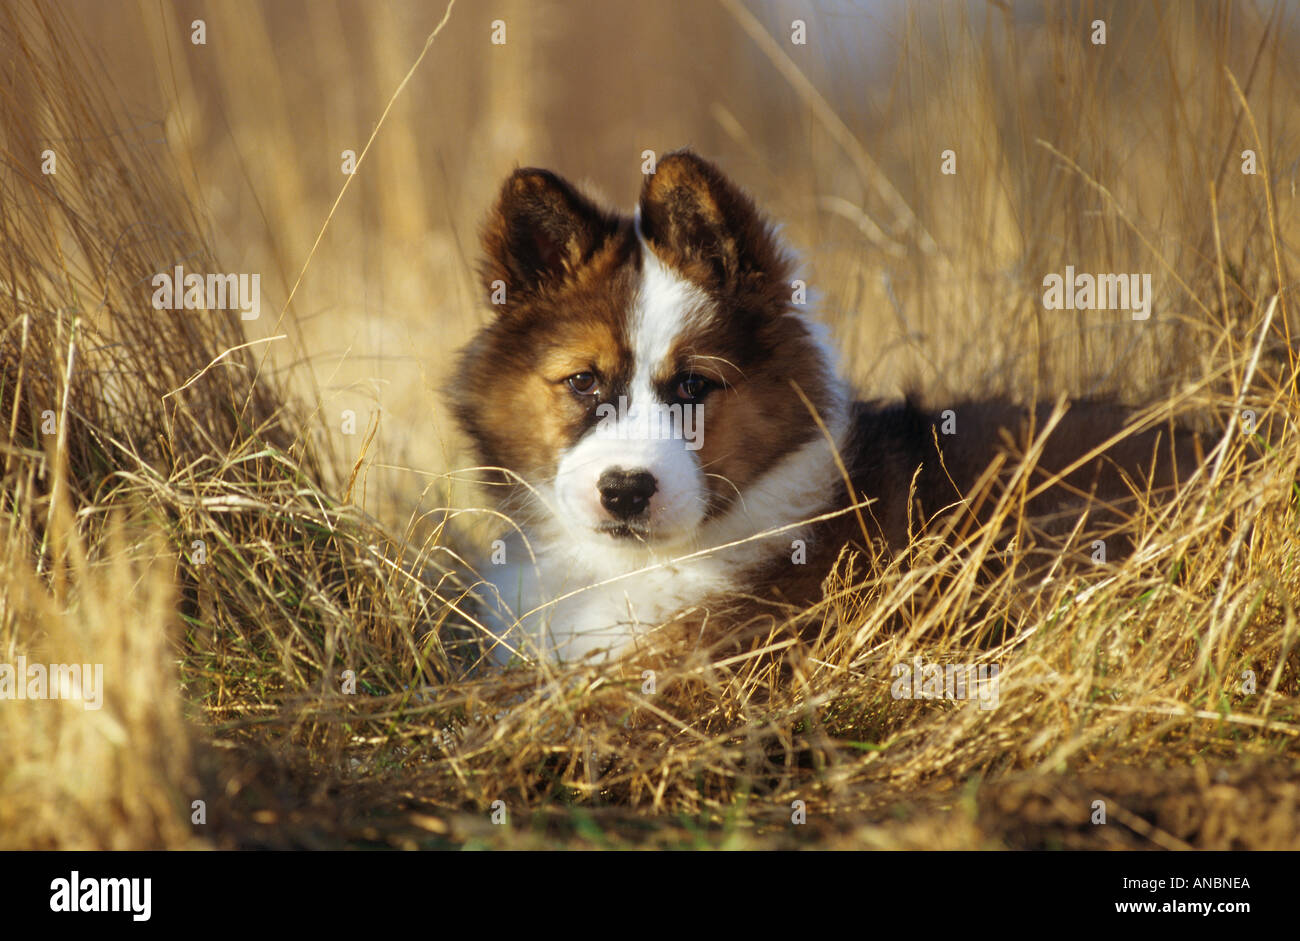 Elo Hund Welpen Gras liegend Stockfotografie Alamy